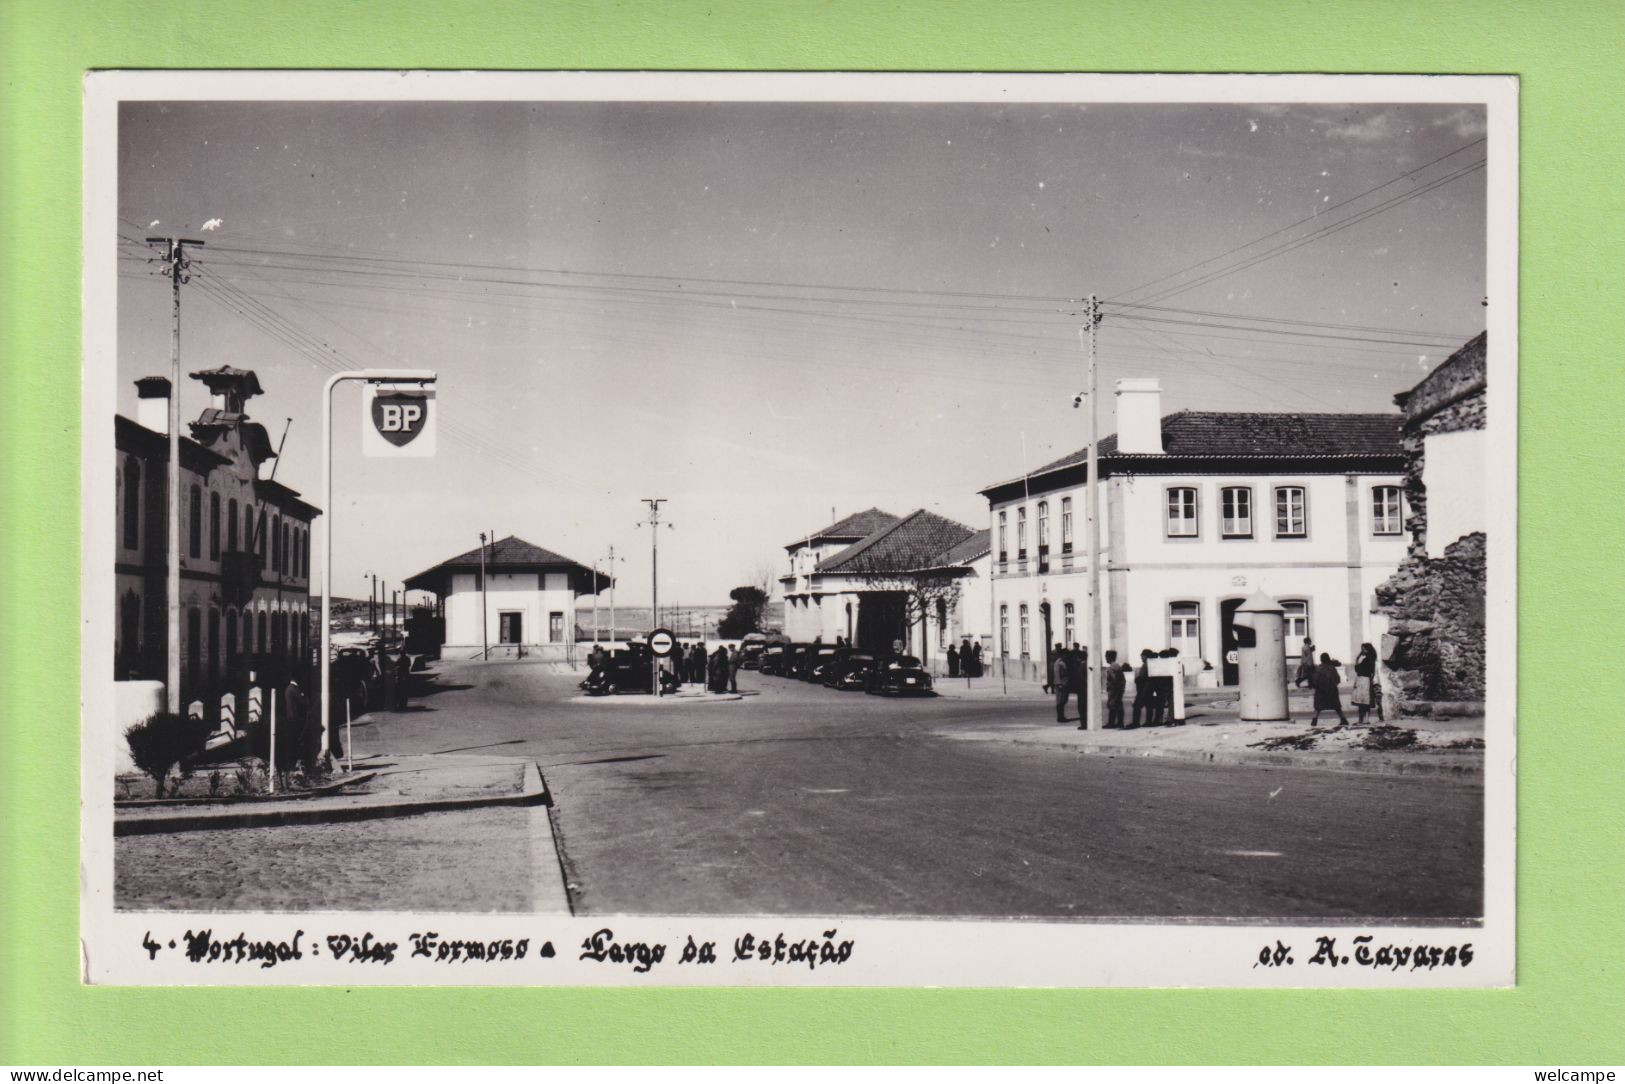 OLD PHOTO Postcard Portugal -  VILAR FORMOSO 1950'S - BP Petrol Station - Guarda